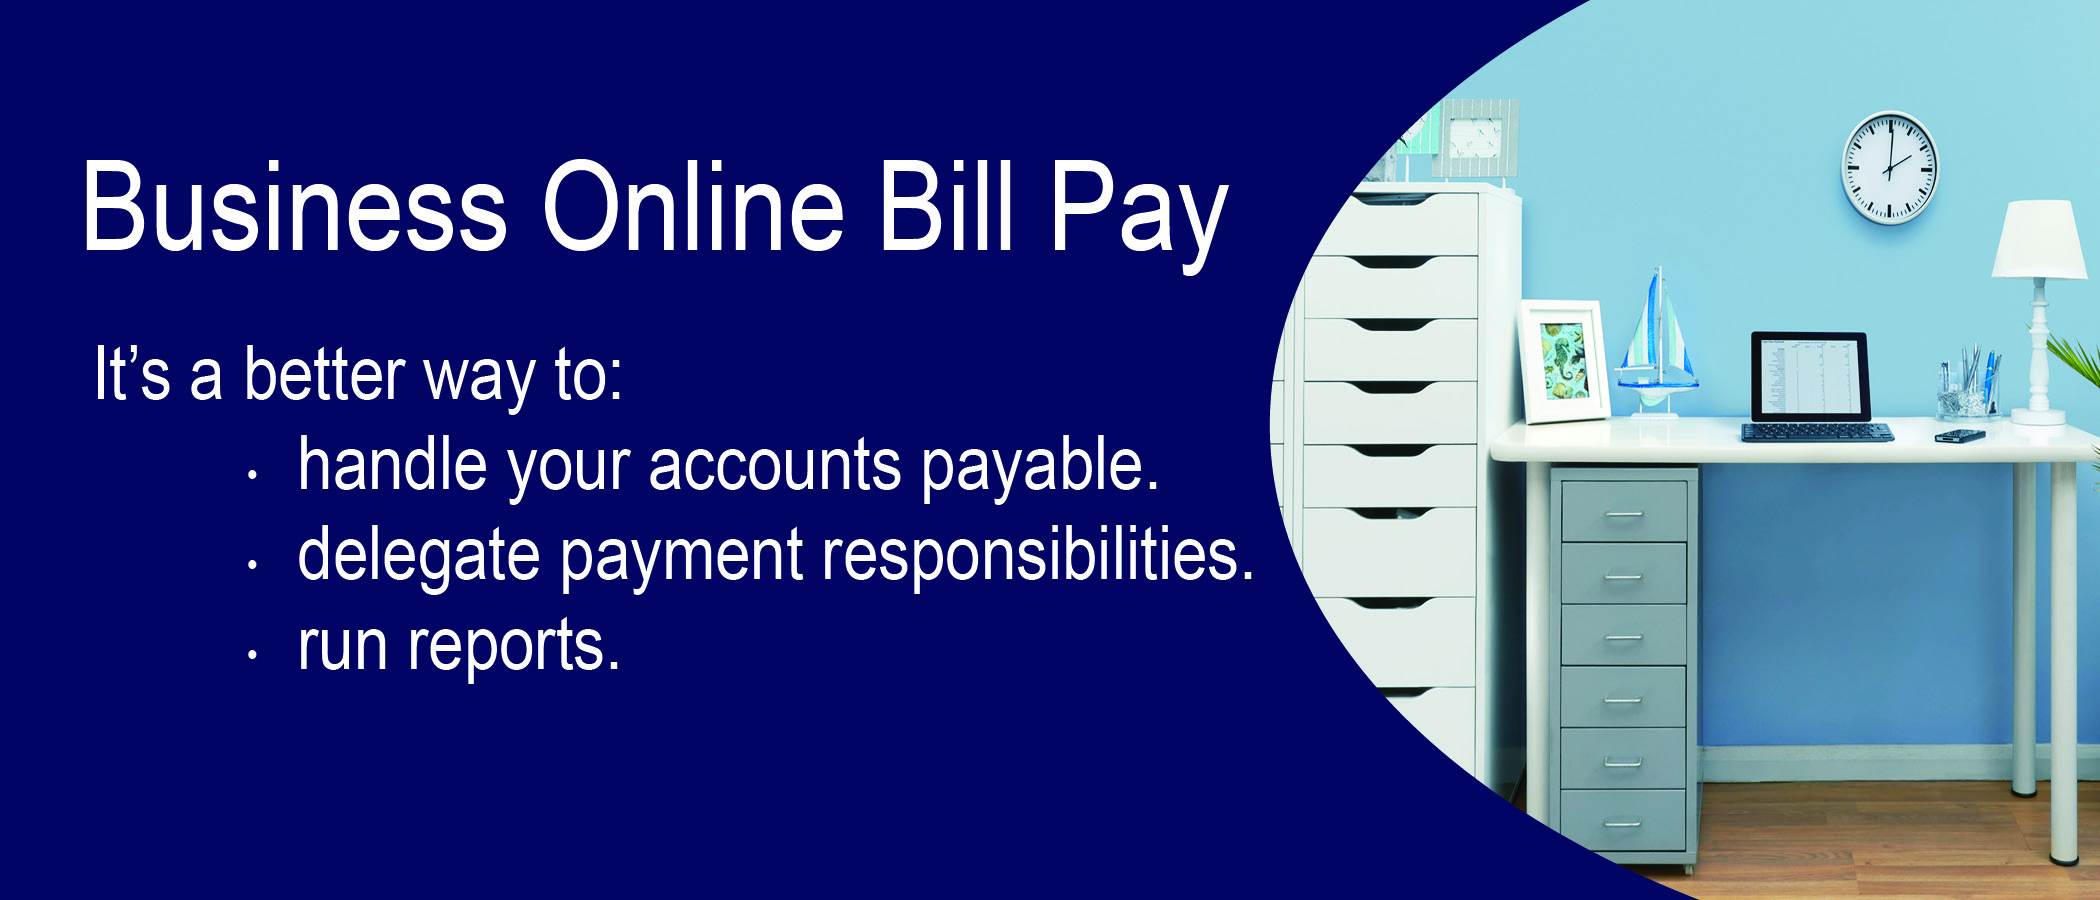 Business Online Bill Pay.